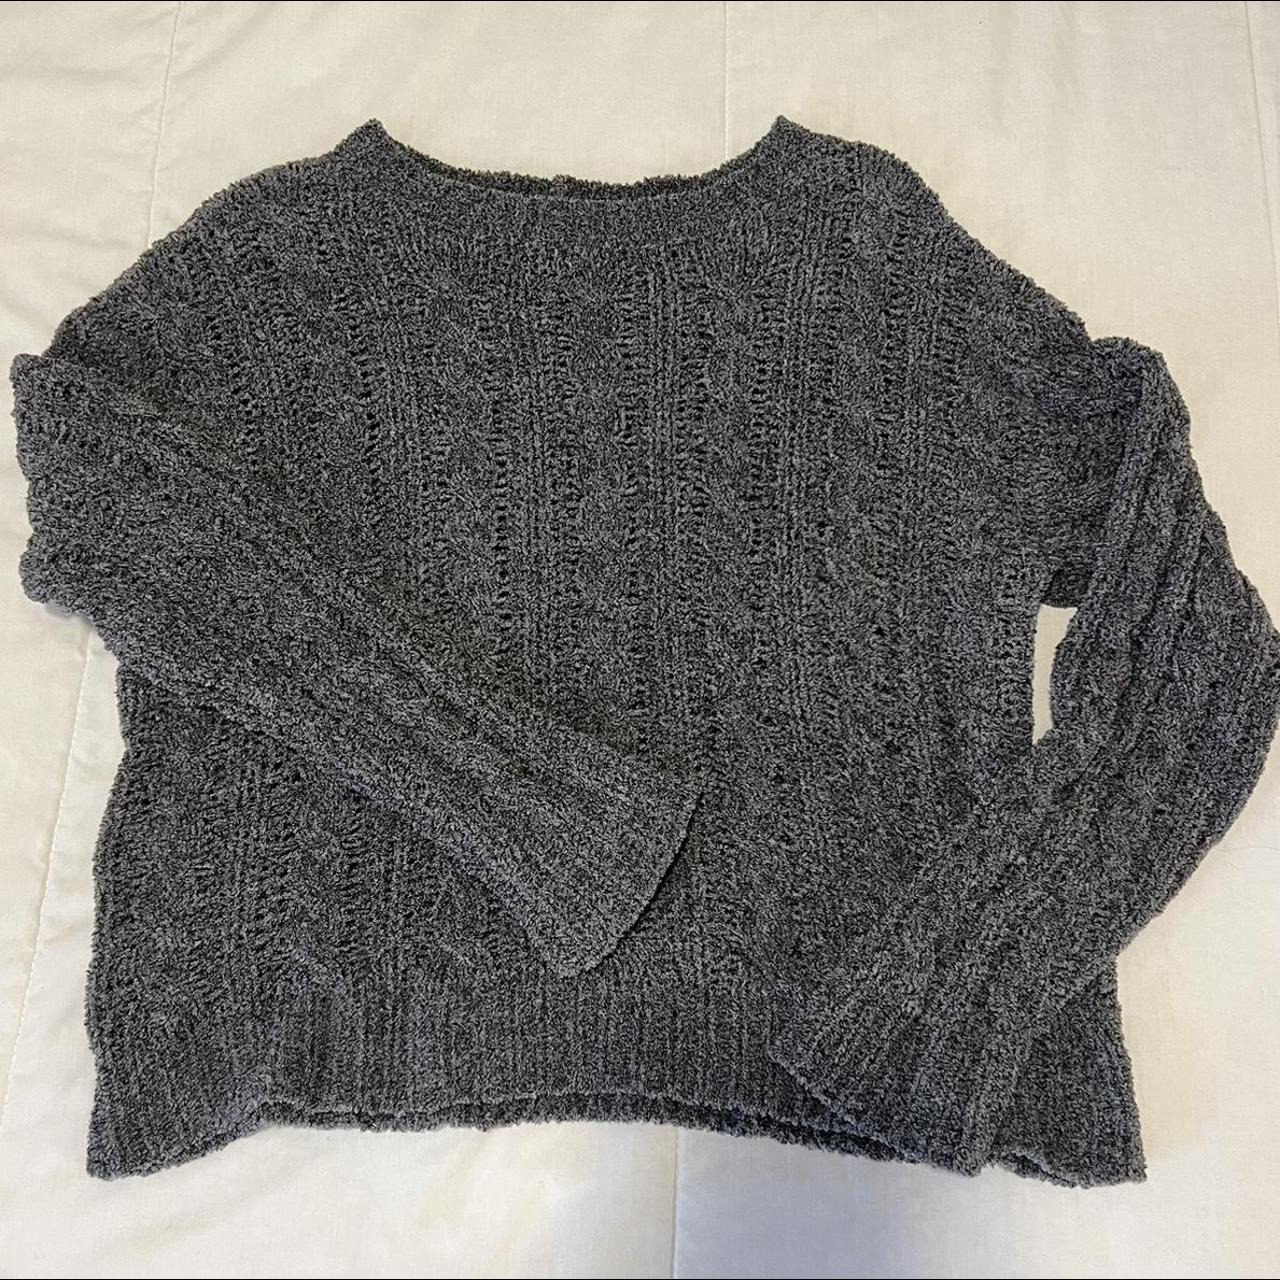 American Eagle sweater leggings all over pattern in gray white black